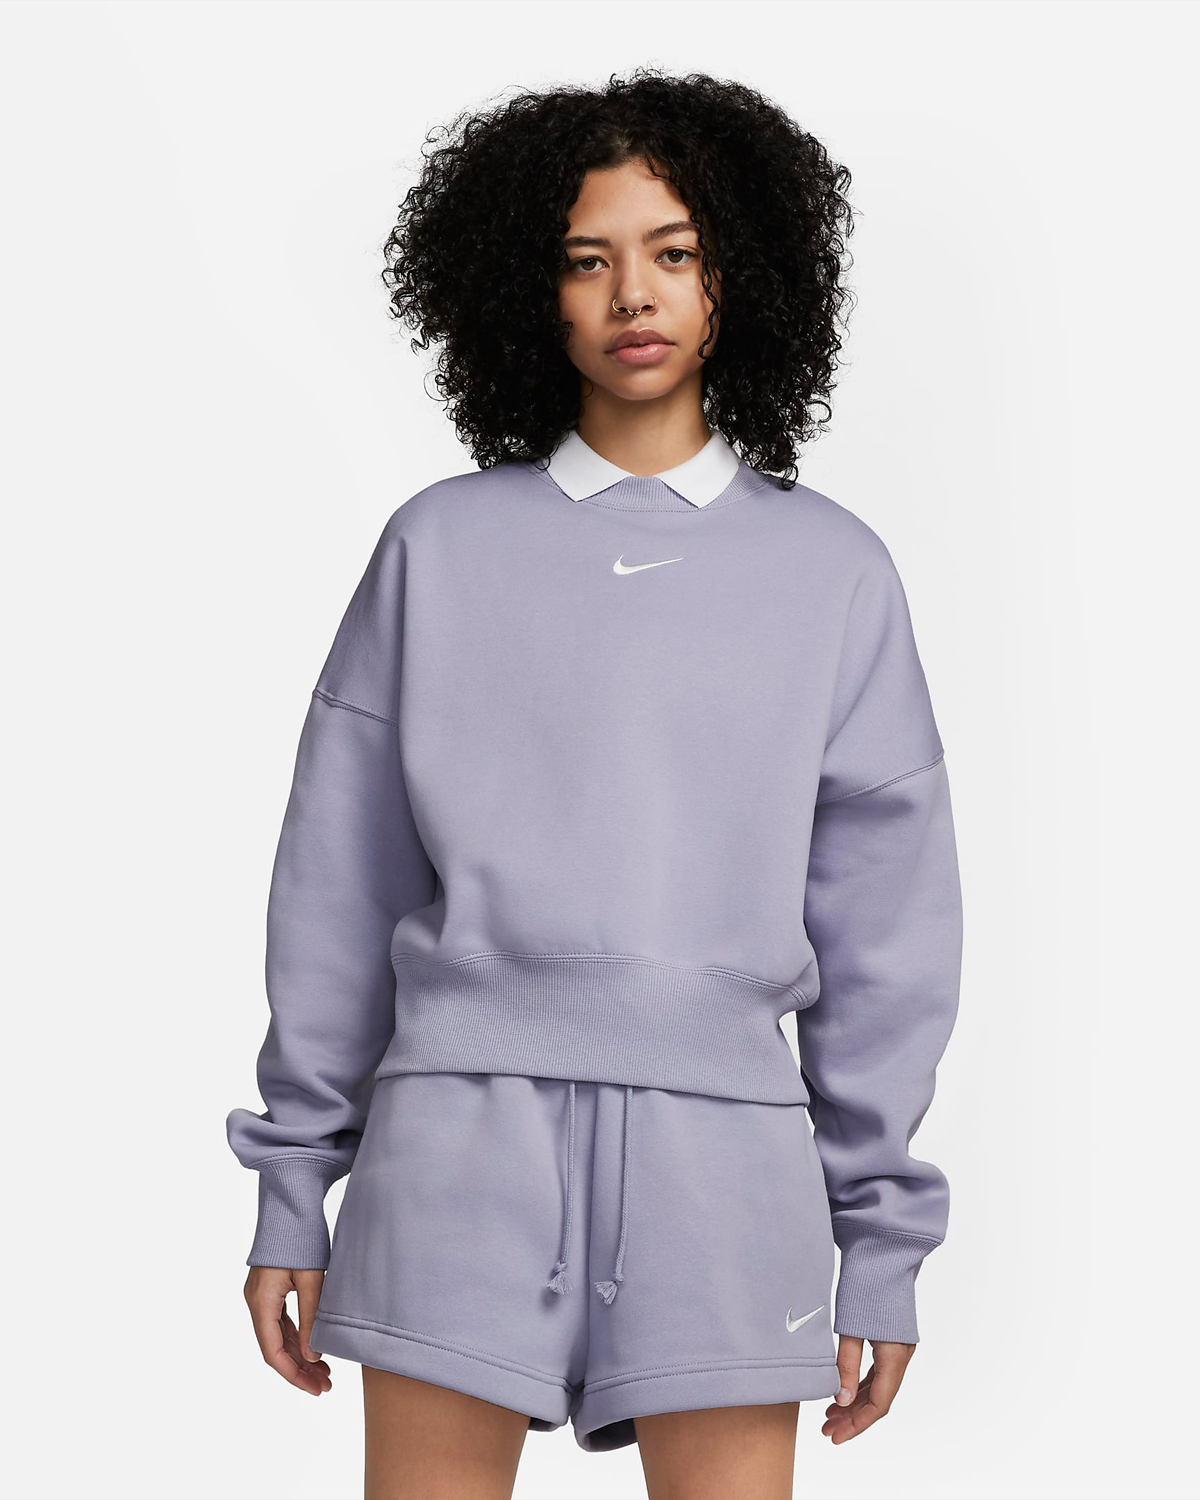 Nike-Sportswear-Phoenix-Womens-Sweatshirt-Indigo-Haze